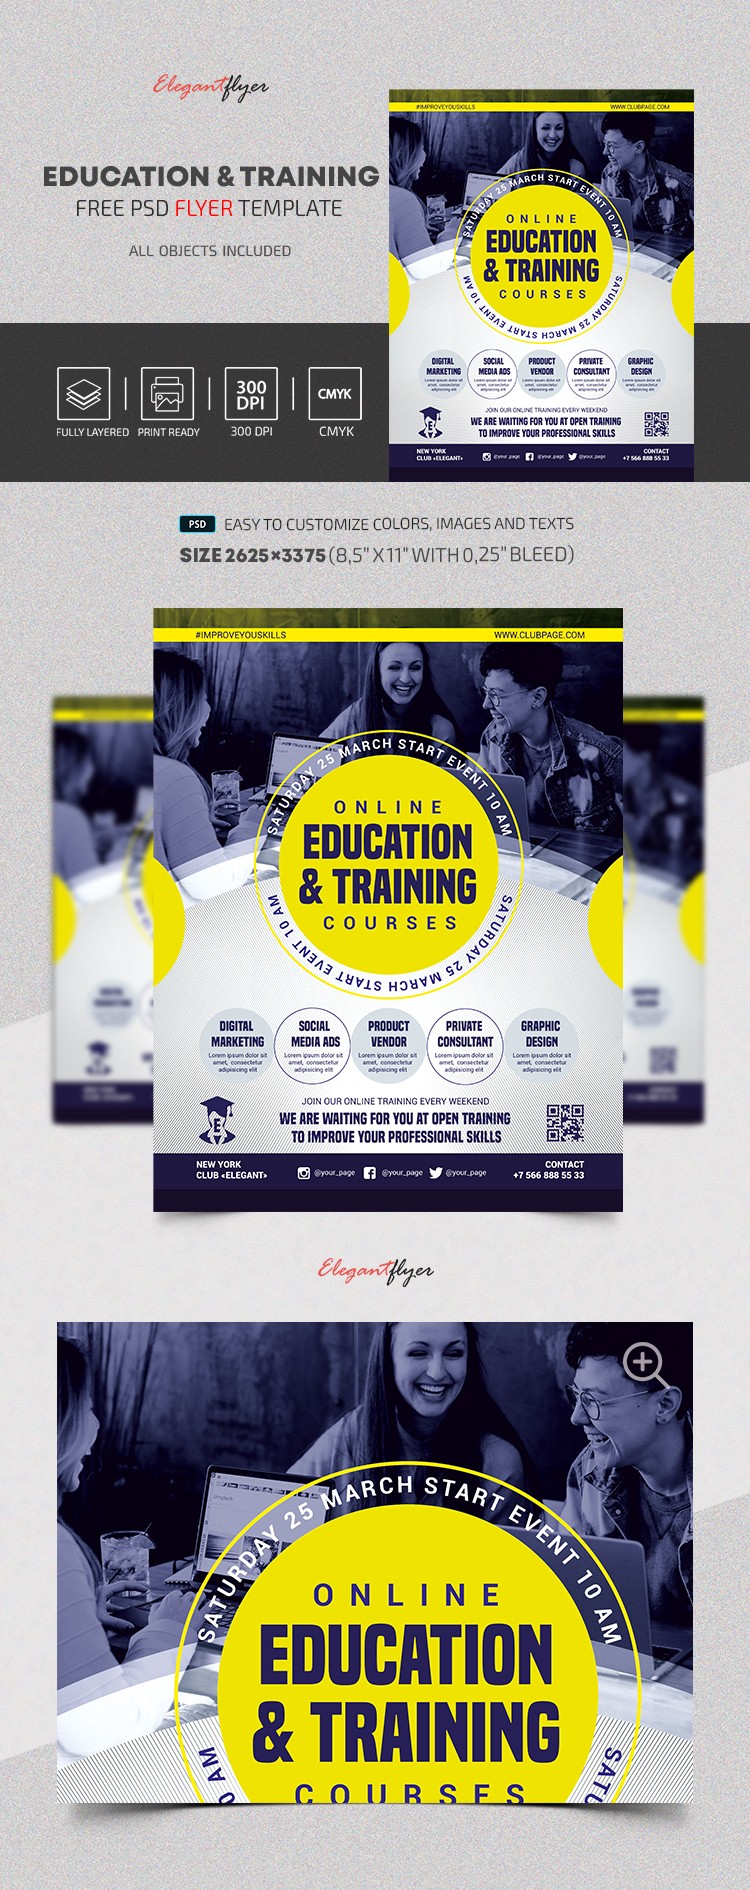 Education & Training Flyer by ElegantFlyer